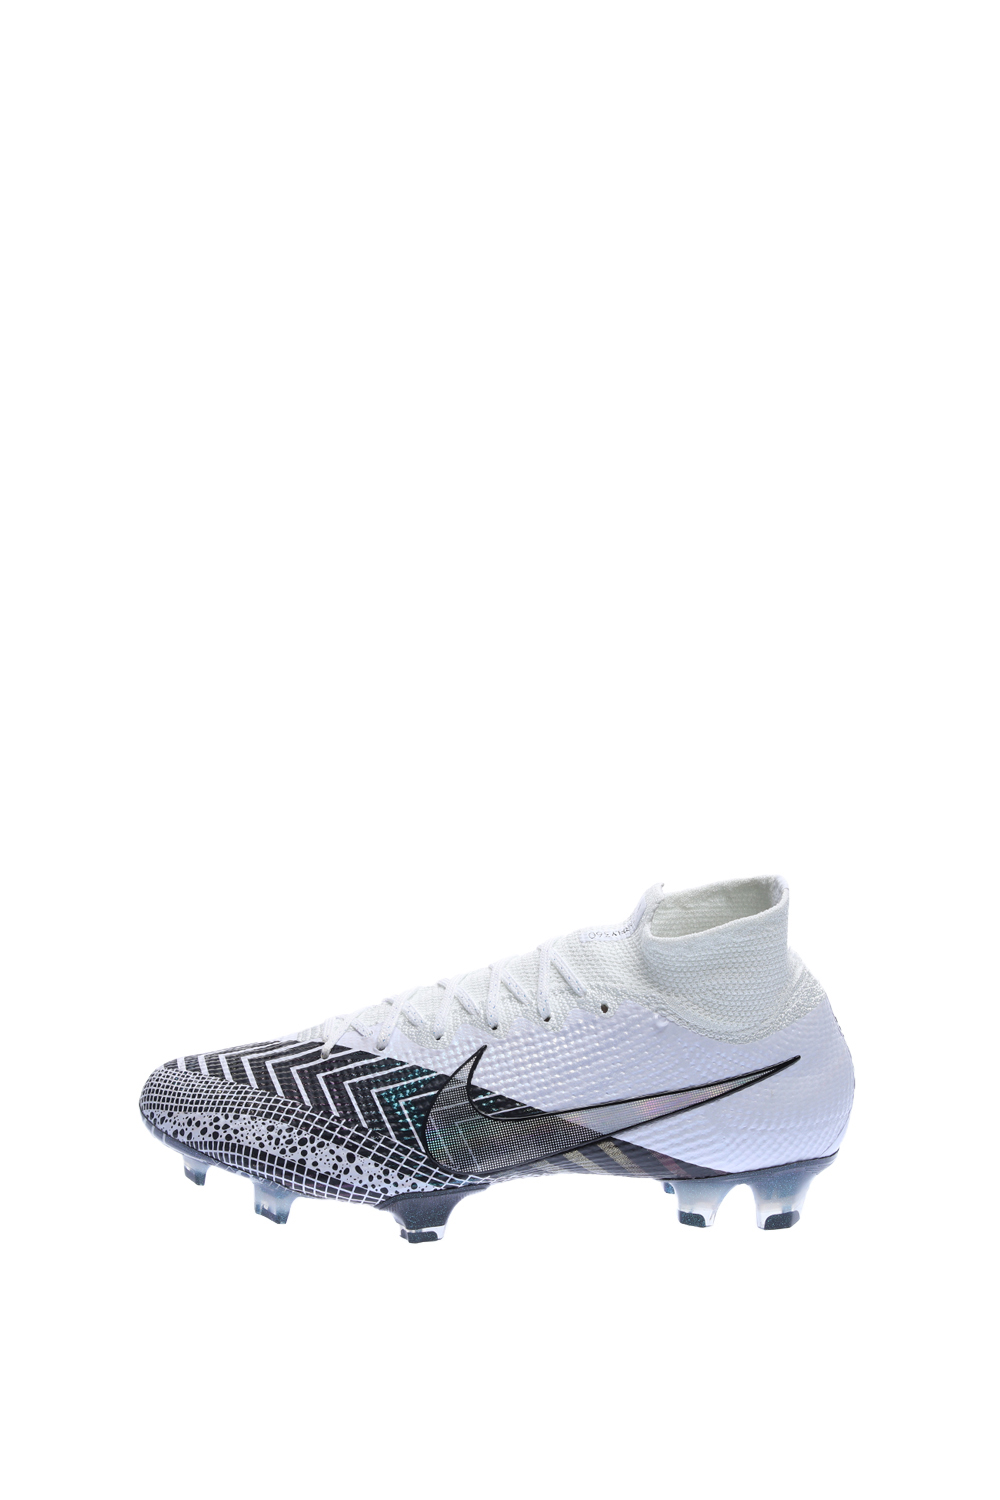 NIKE - Unisex παπούτσια football Nike Mercurial Superfly 7 Elite λευκά Ανδρικά/Παπούτσια/Αθλητικά/Football